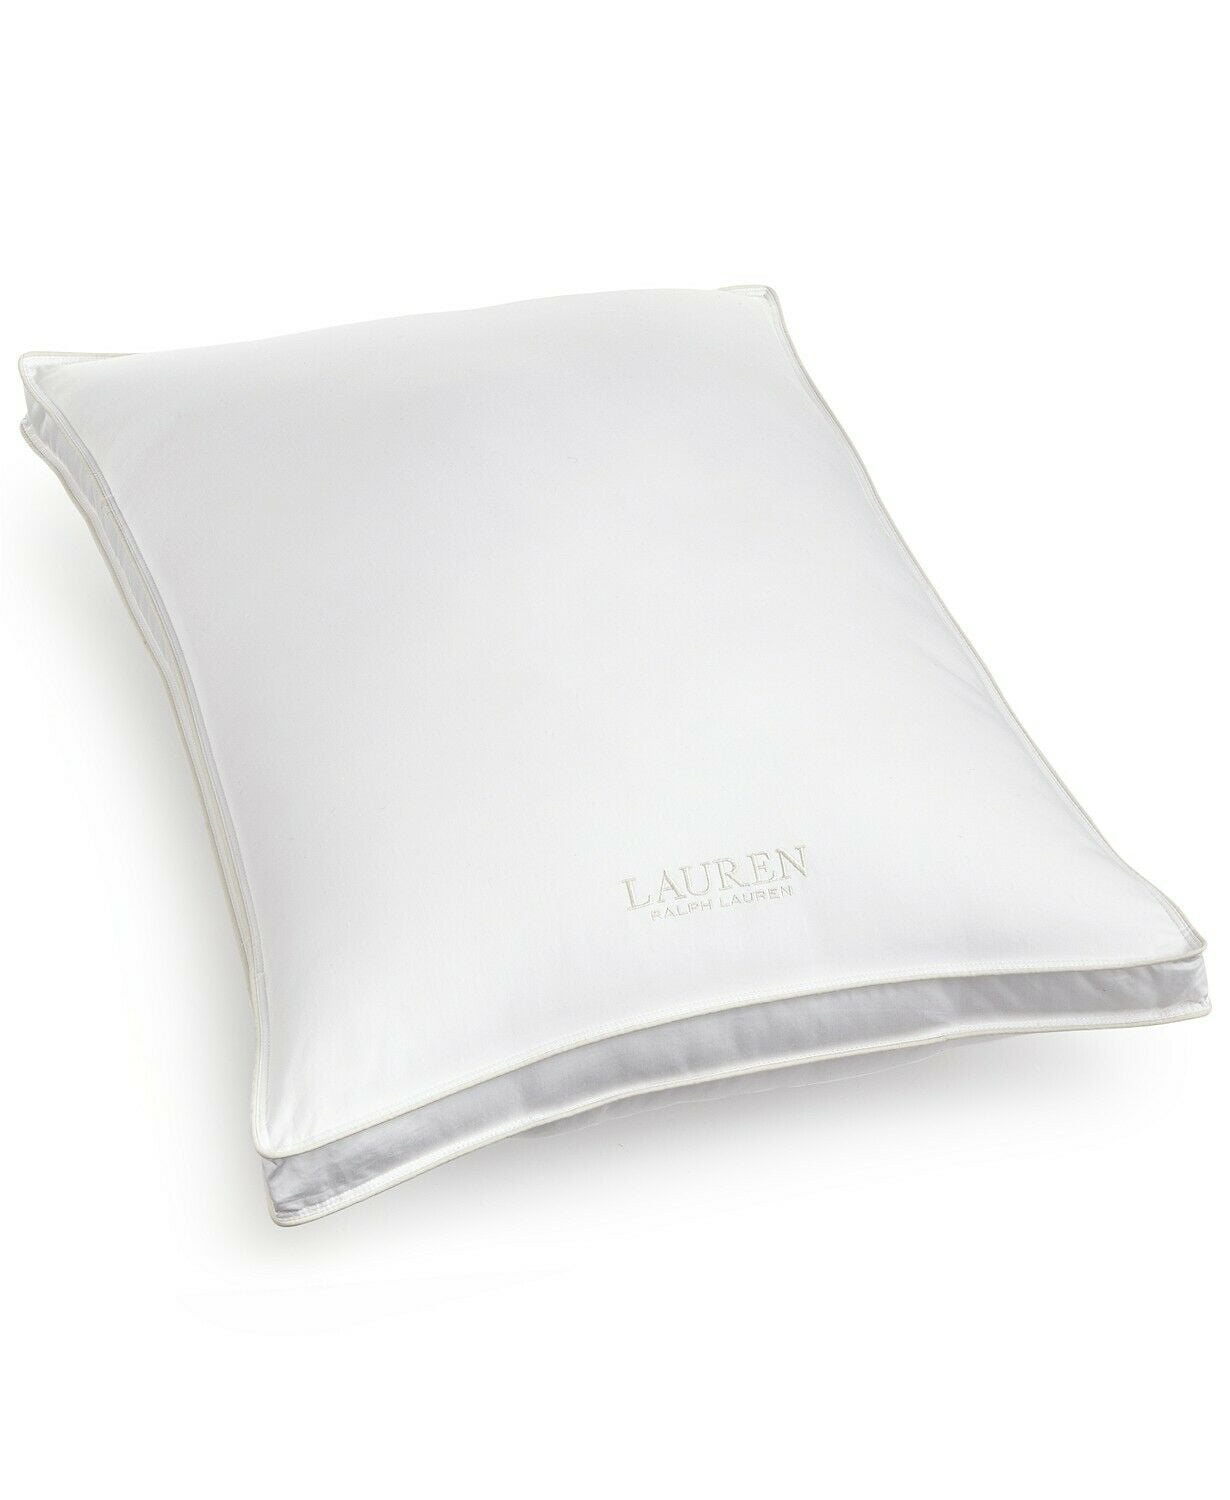 Lauren Ralph Lauren Lux-Loft Extra Firm Density Down Alternative Bed Pillow  KING 